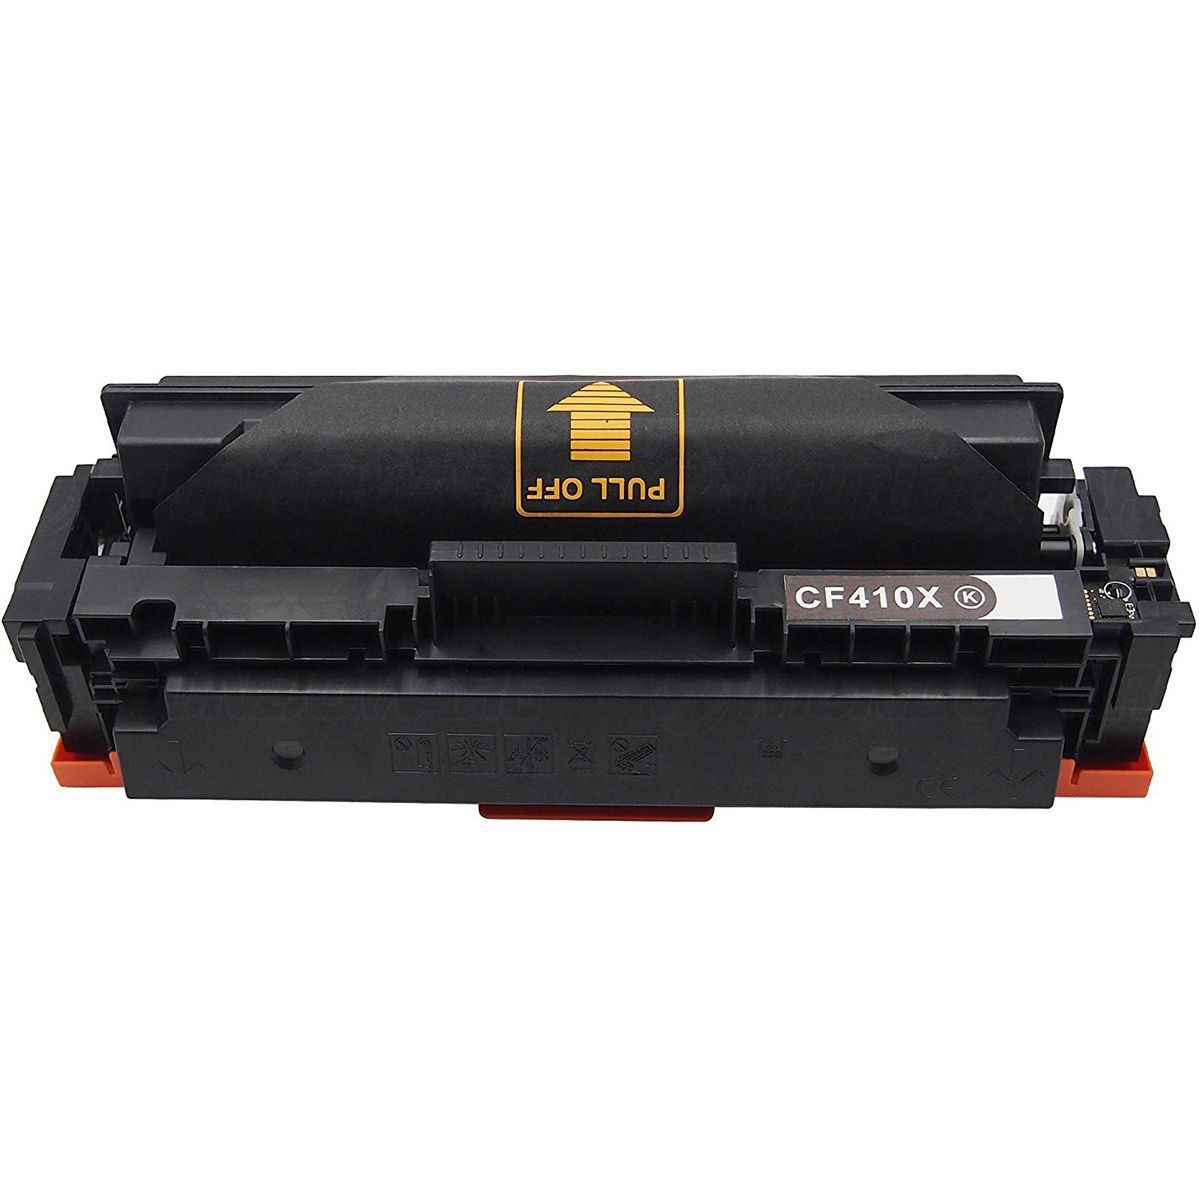 Compatível: Toner CF410X 410X para Impressora HP M477fdw M452dn M477fnw M452nw M477 M452 M-477fdw / Preto / 6.500